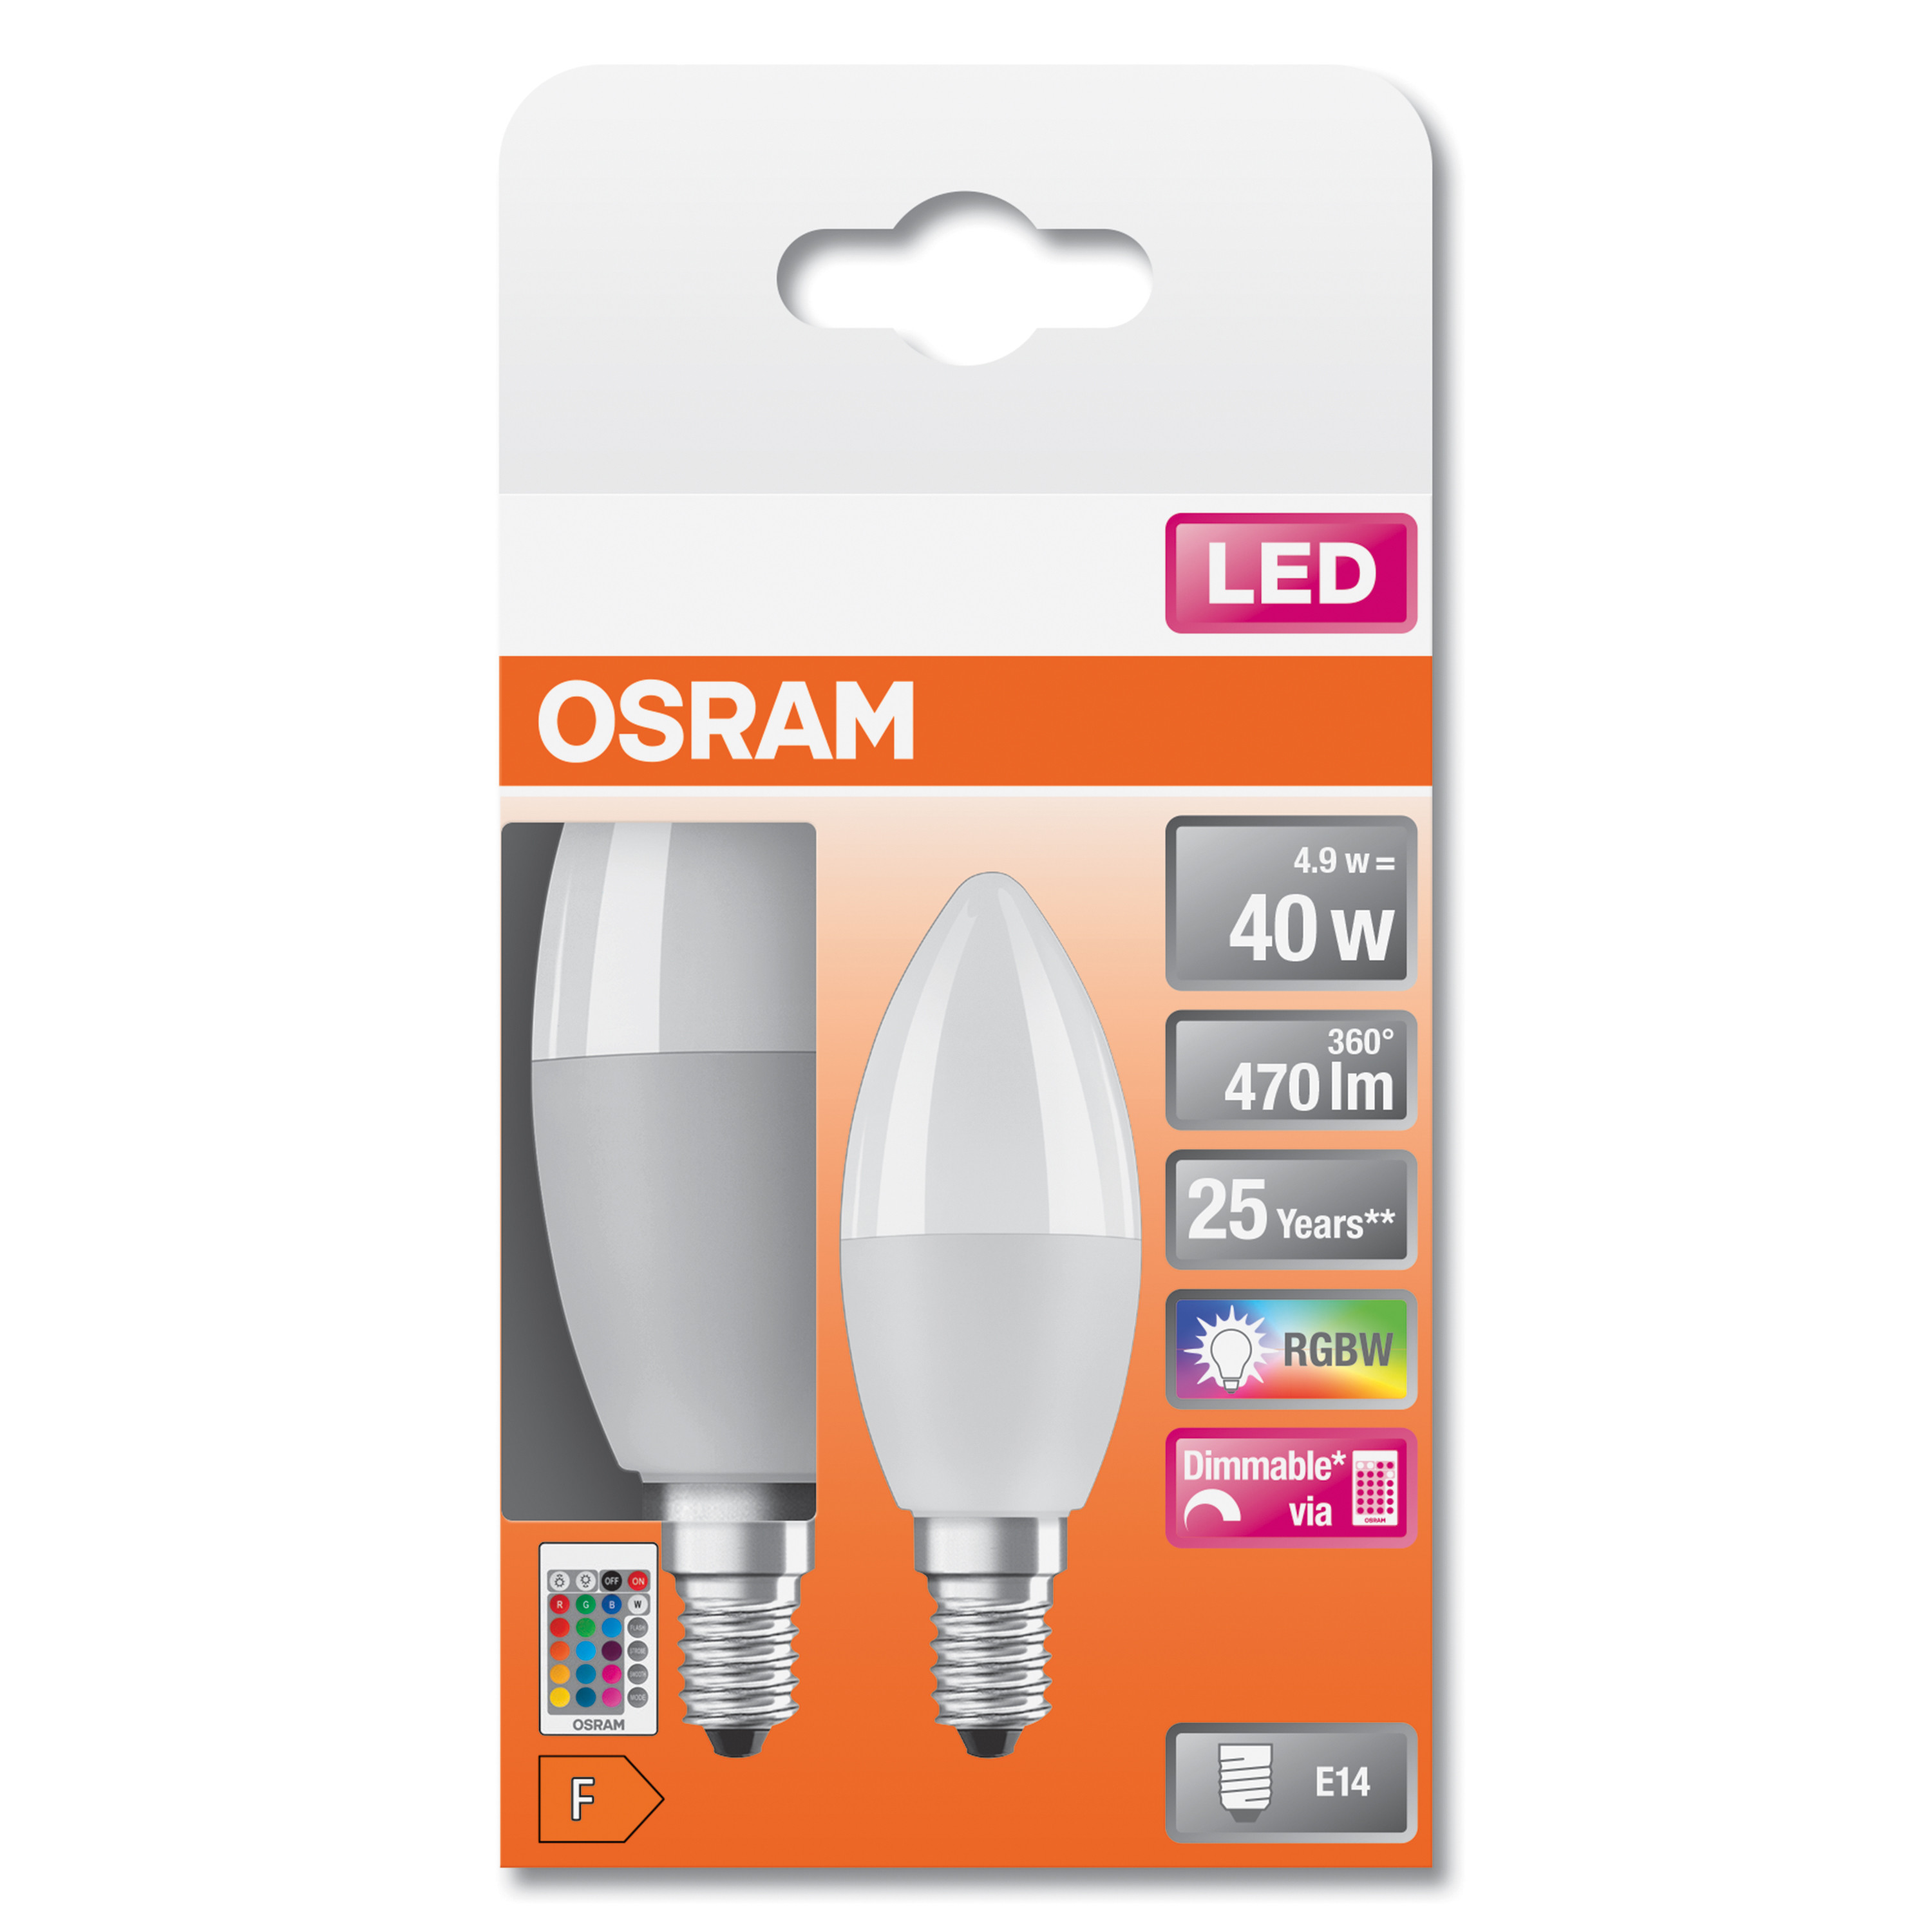 LED LED remote lumen 470 with RGBW OSRAM  Warmweiß Retrofit lamps control Lampe